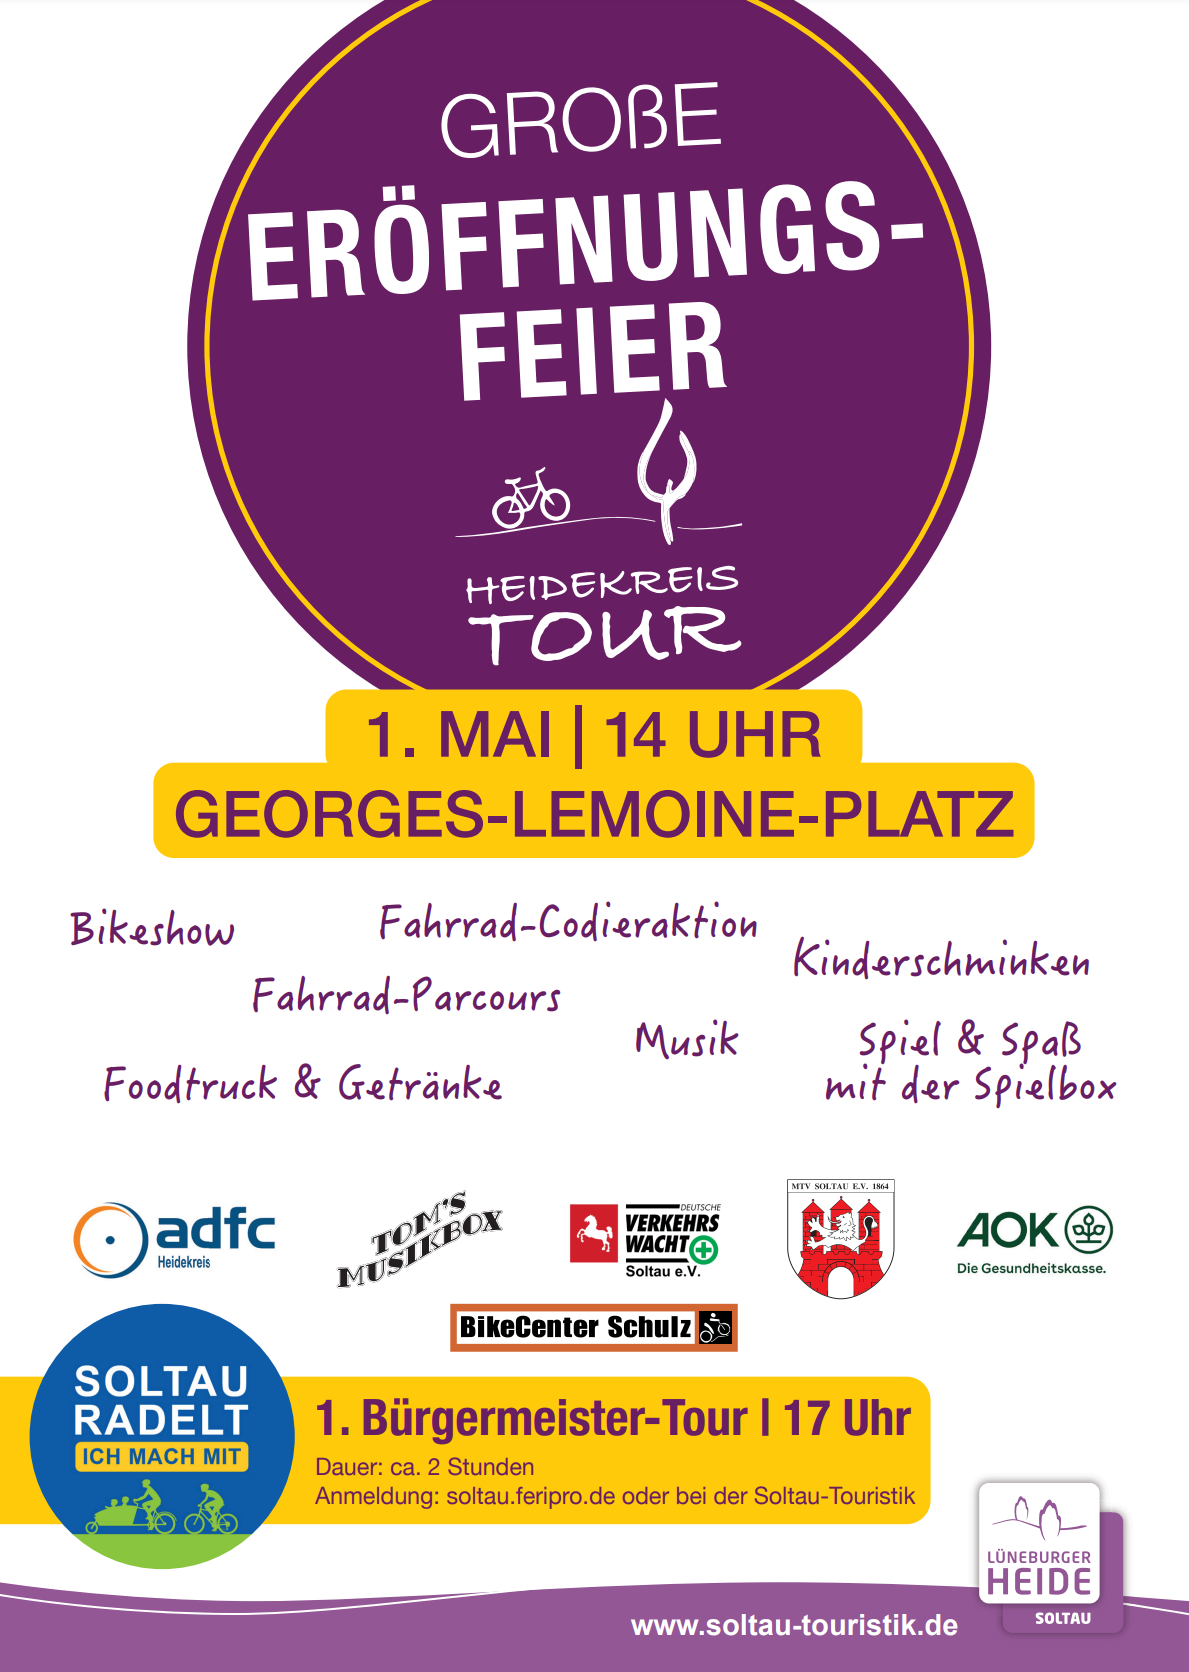 Große Eröffnunfsfeier - Heidekreis Tour Plakat